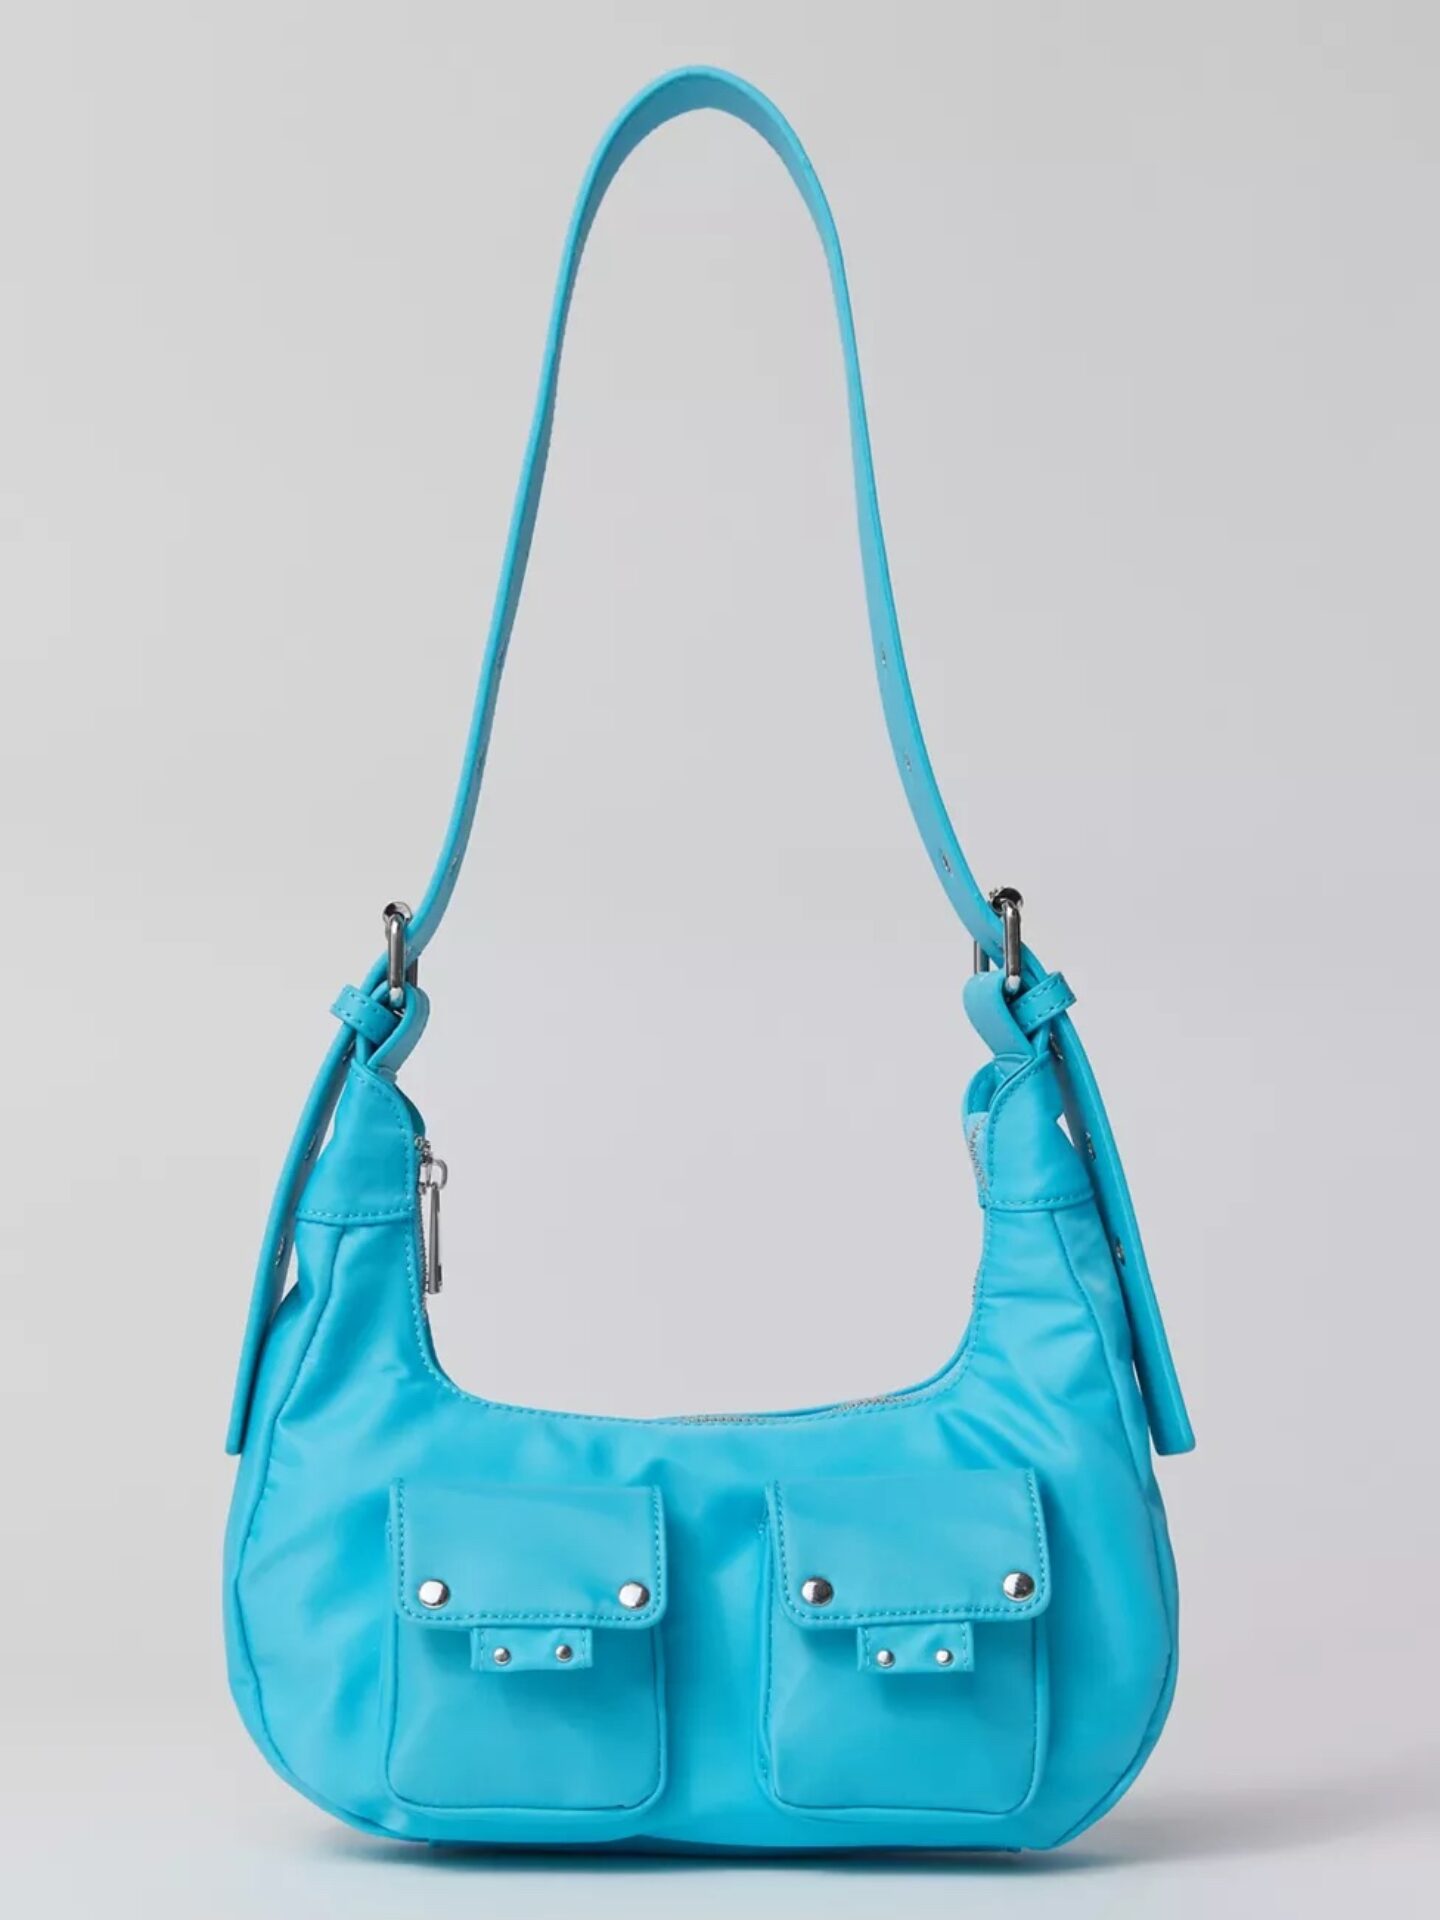 Carolina Herrera's Latest Handbag Collection Is Inspired by—Wait